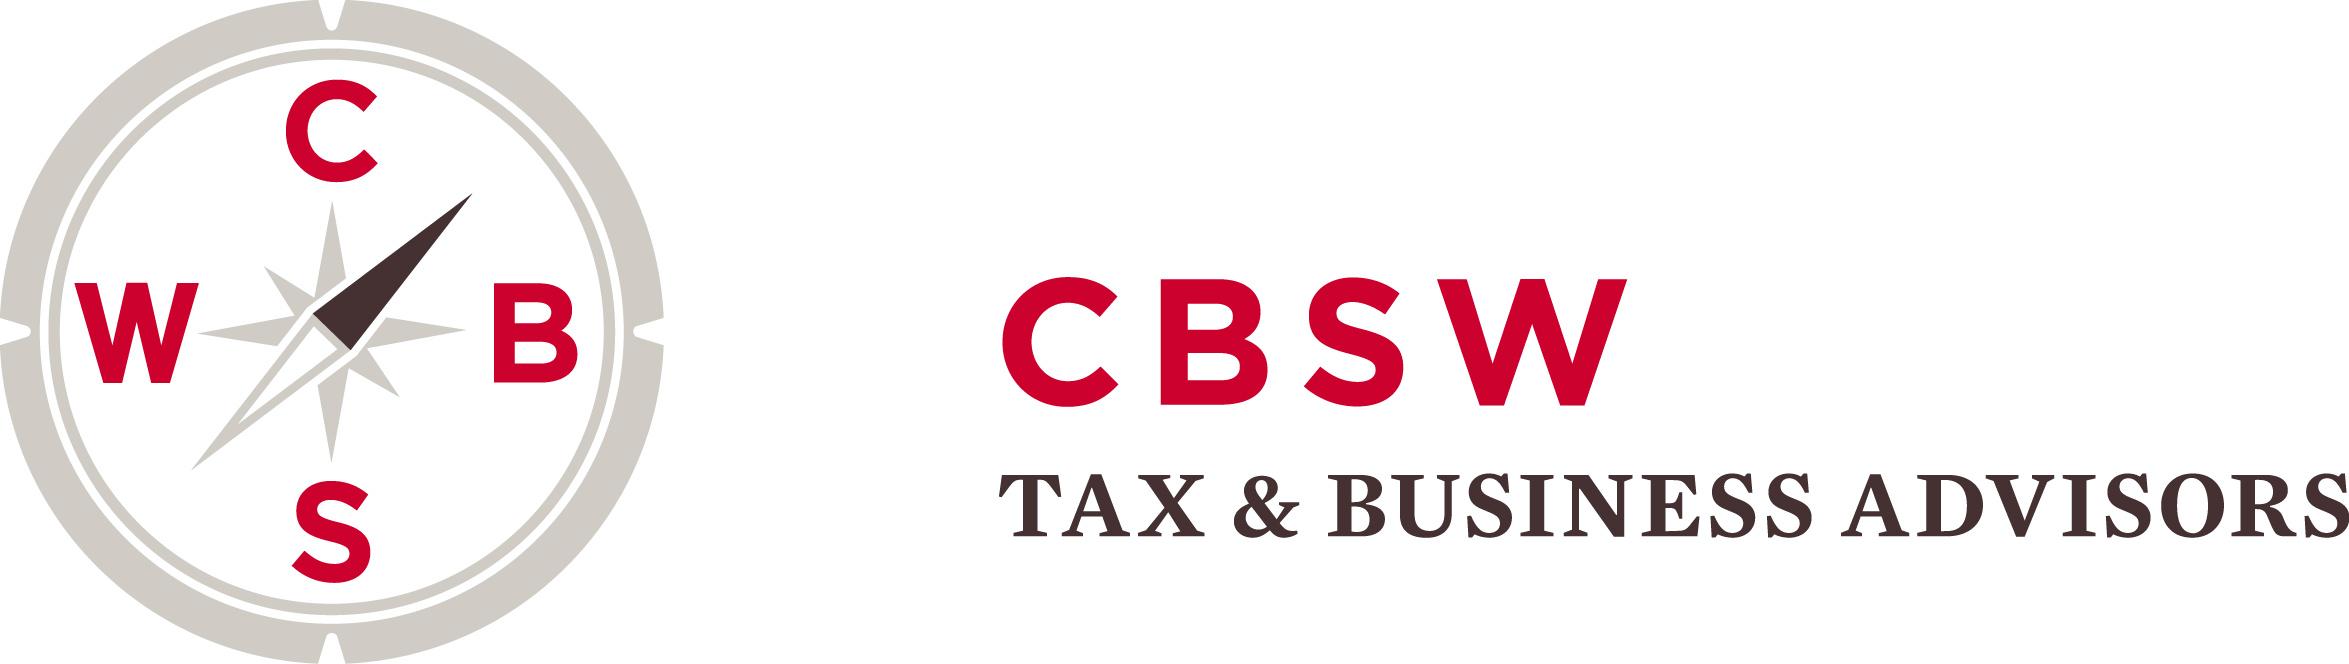 CBSW Tax & Business Advisors